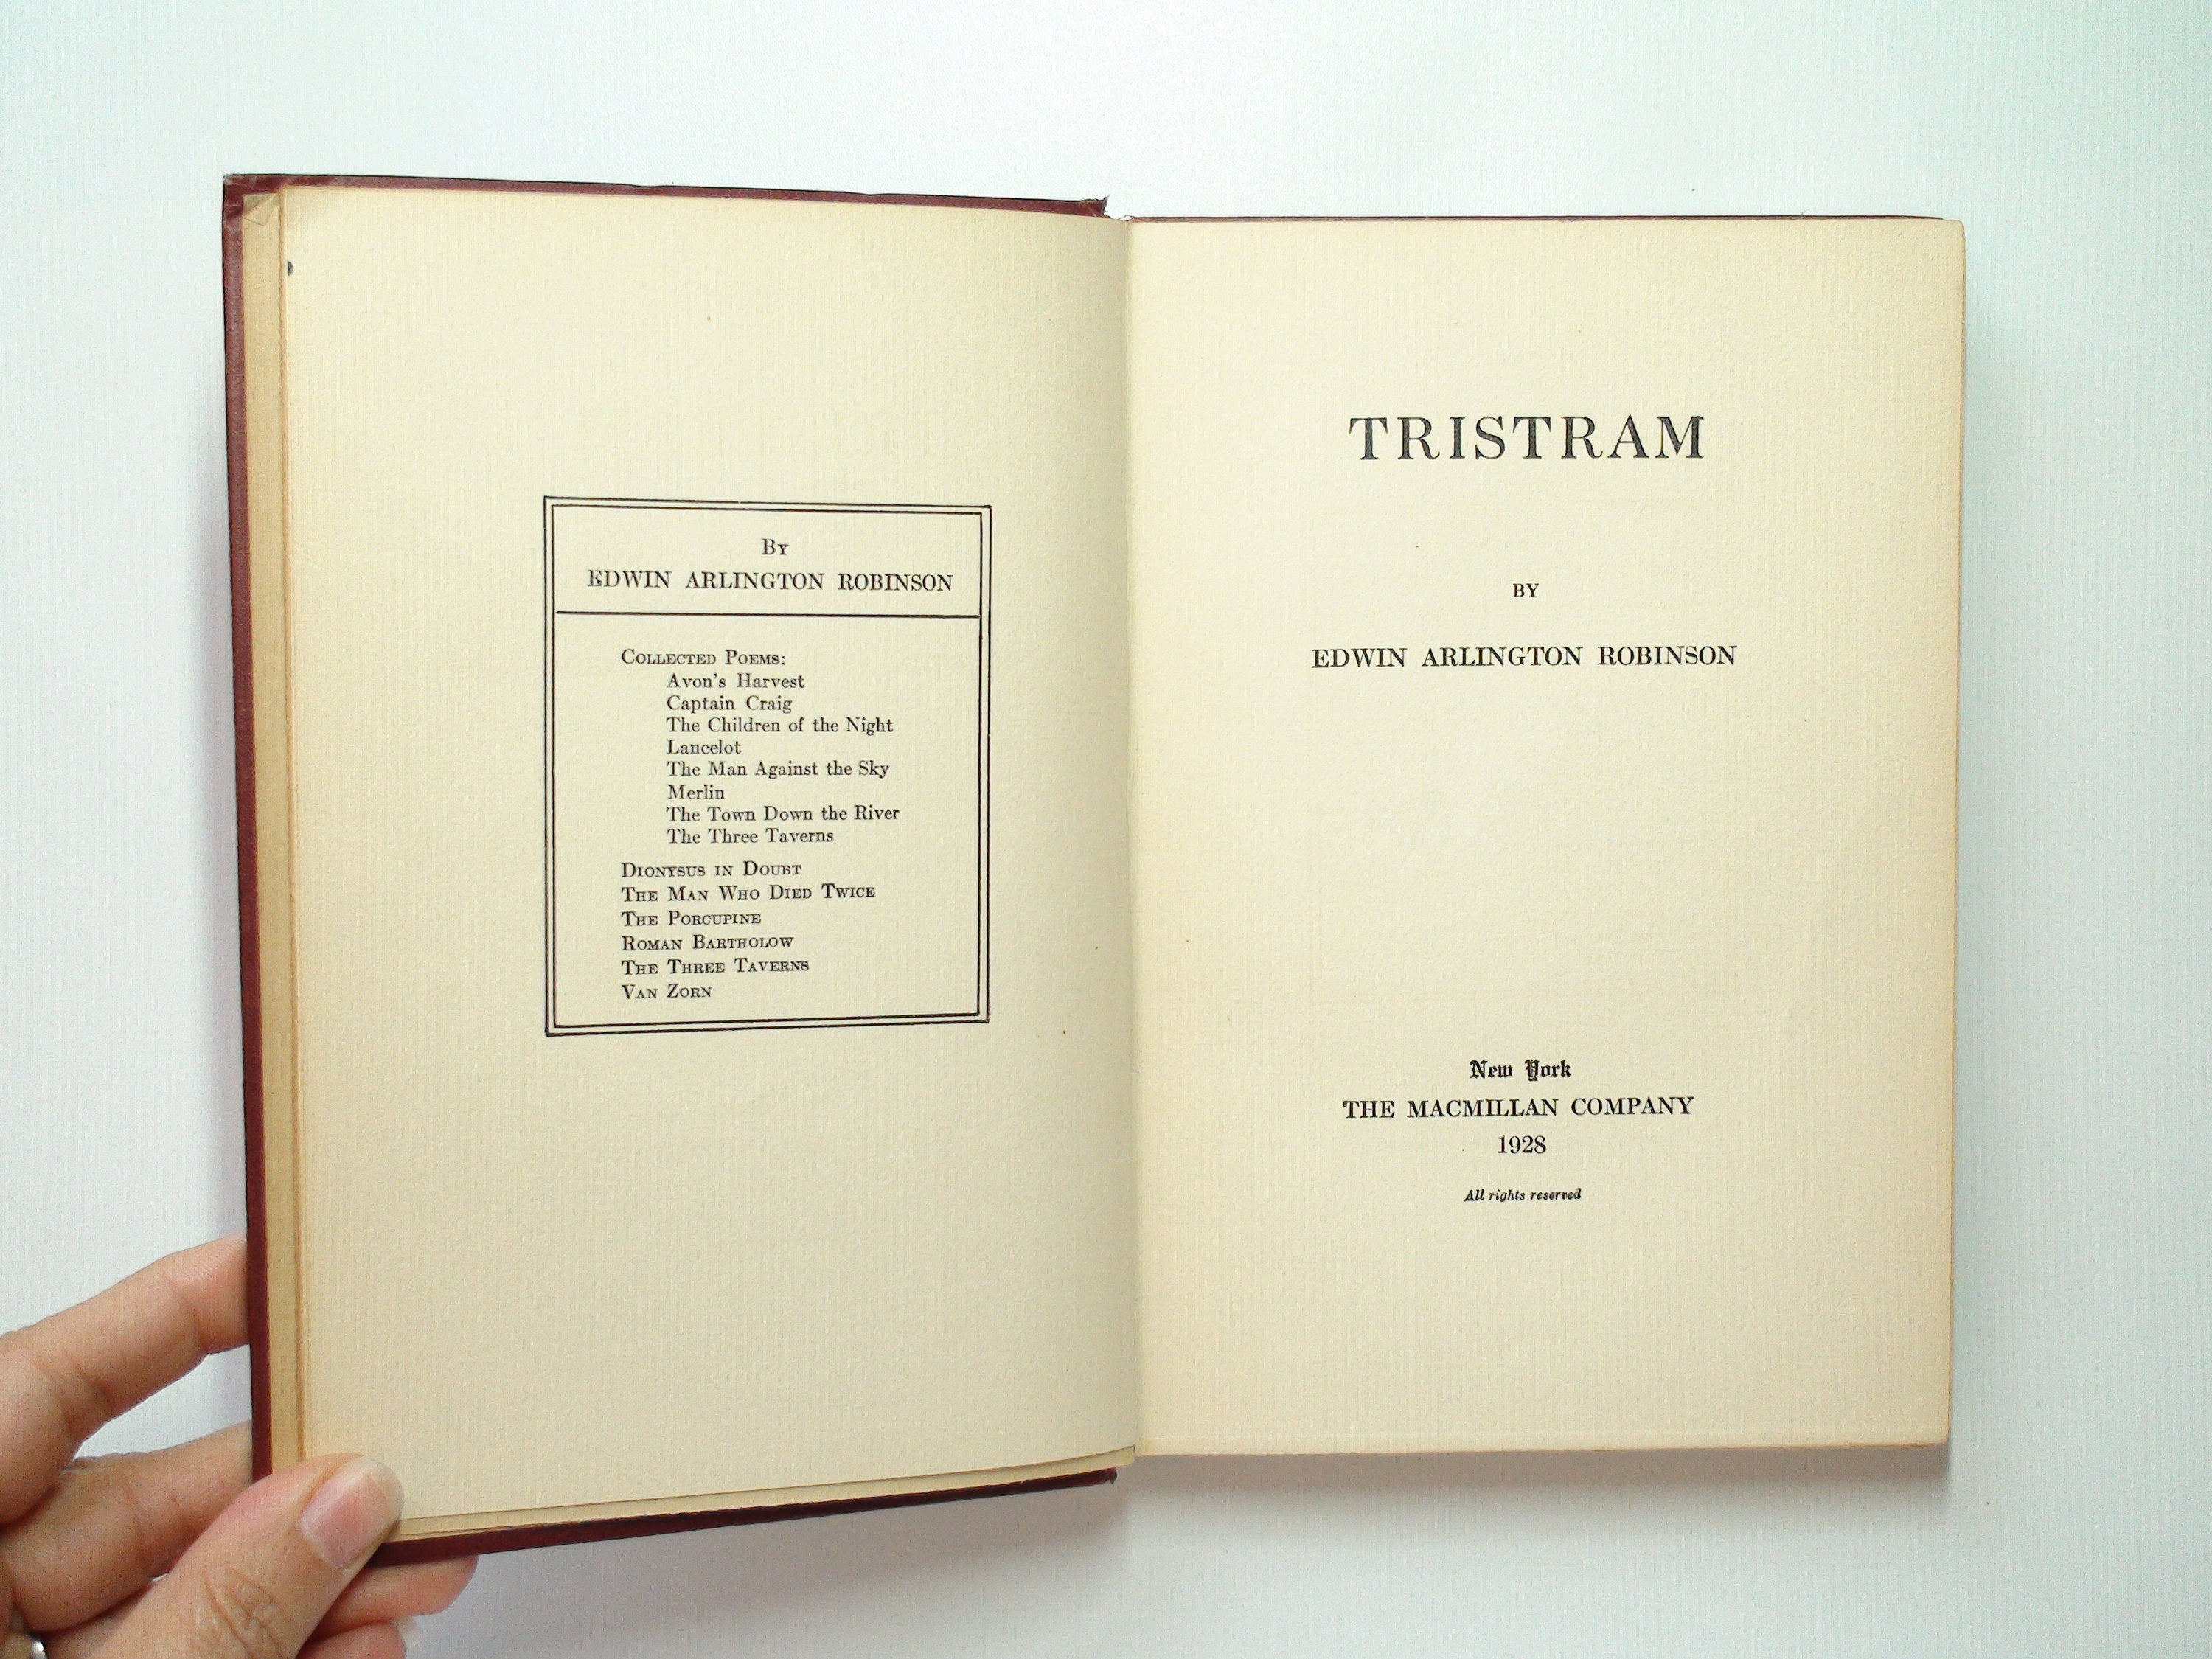 Tristram by Edwin Arlington Robinson, Epic Arthurian Poem, Macmillan, 1928